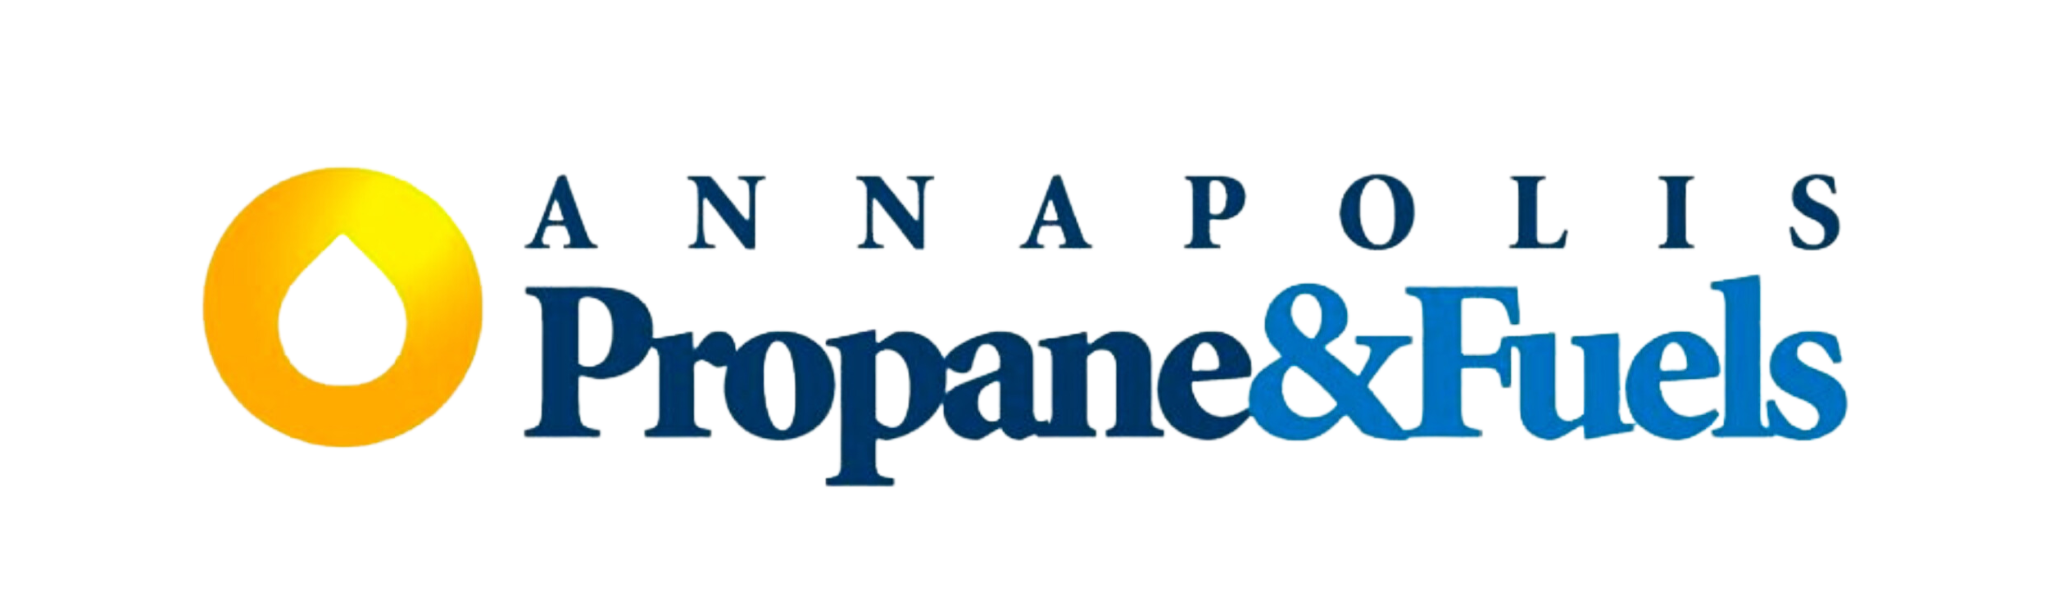 annapolis propane and fuels logo